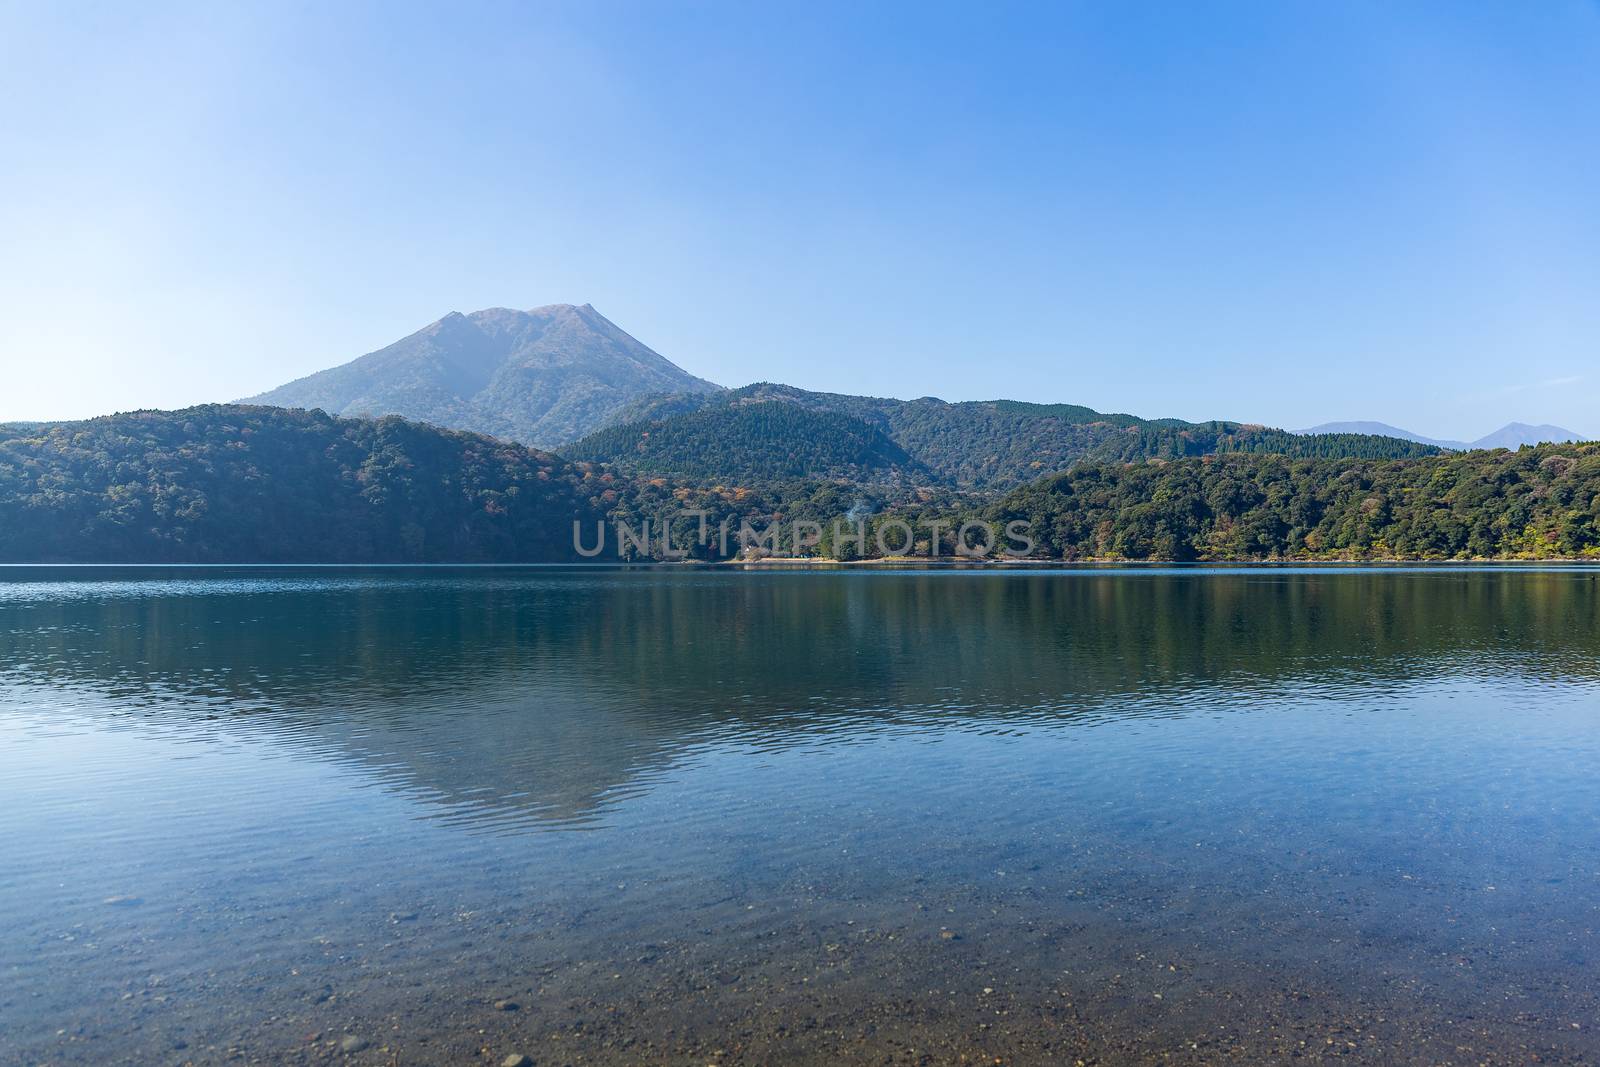 Mount Kirishima and lake by leungchopan